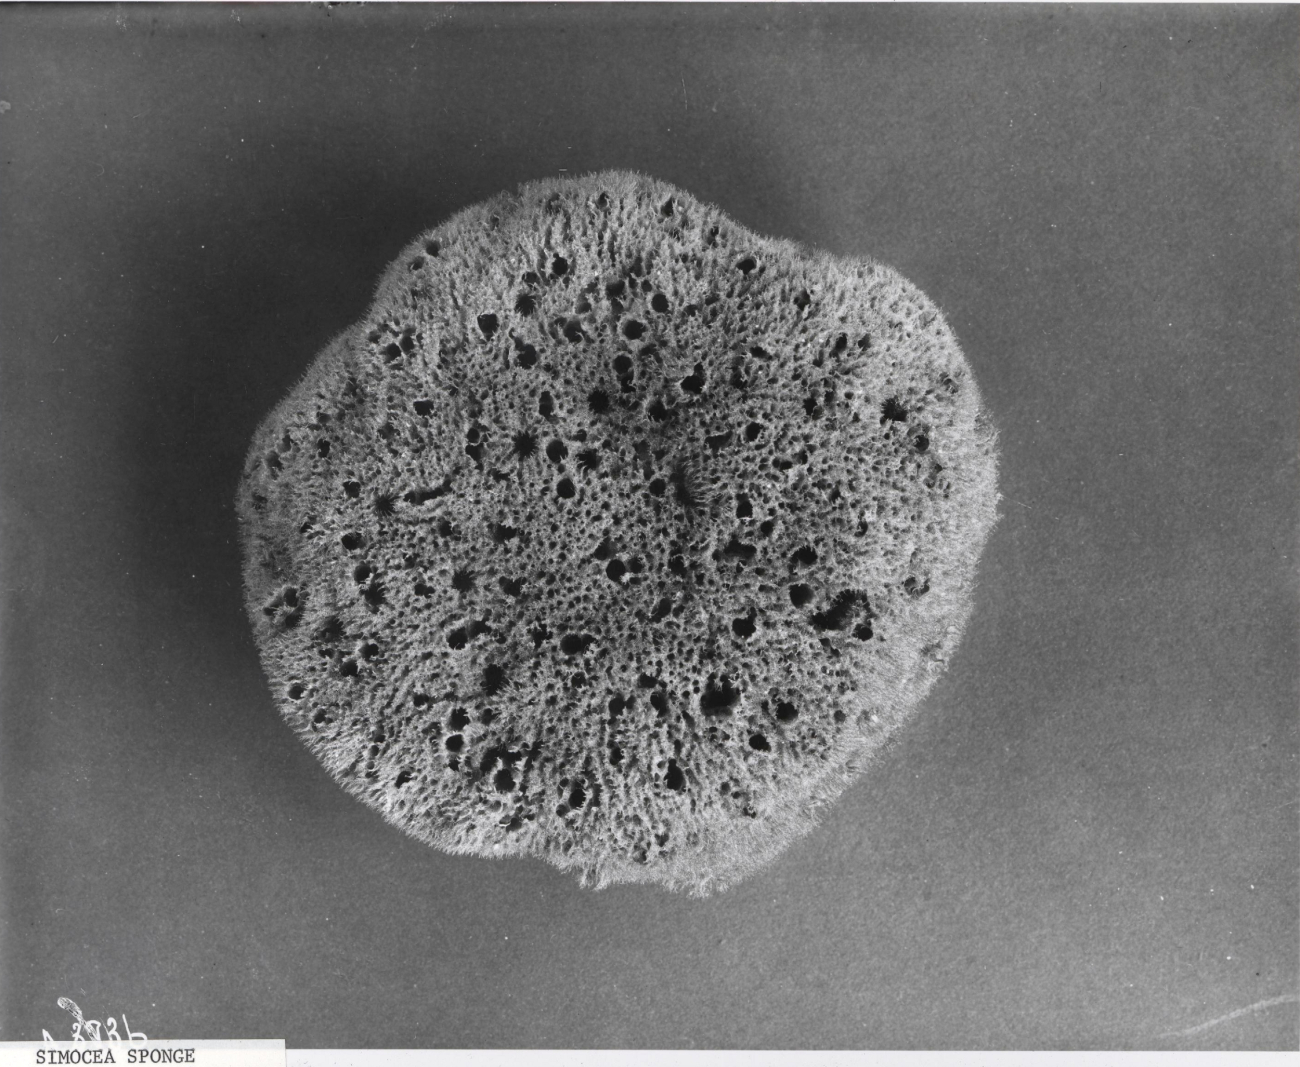 Simocea sponge - specimen from Mediterranean Sea